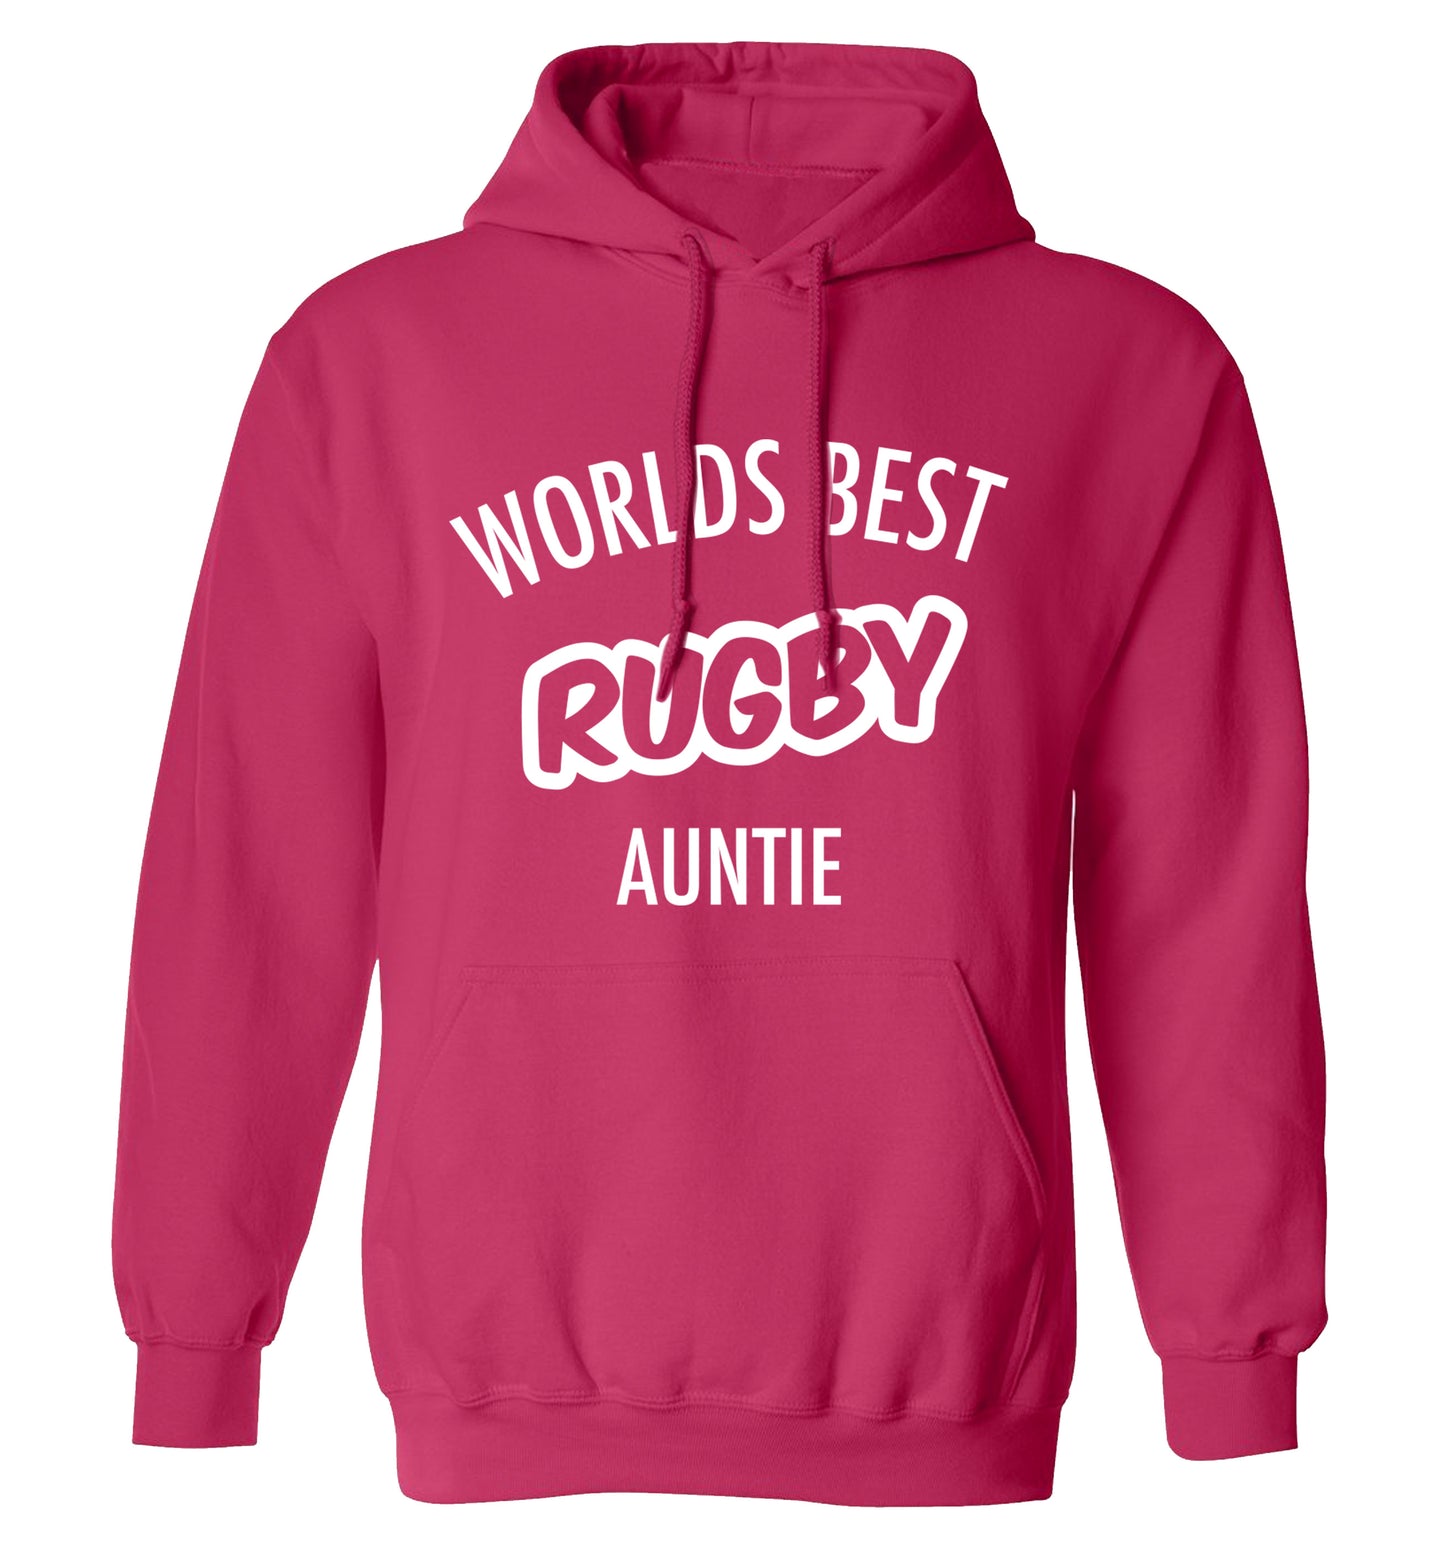 Worlds best rugby auntie adults unisex pink hoodie 2XL